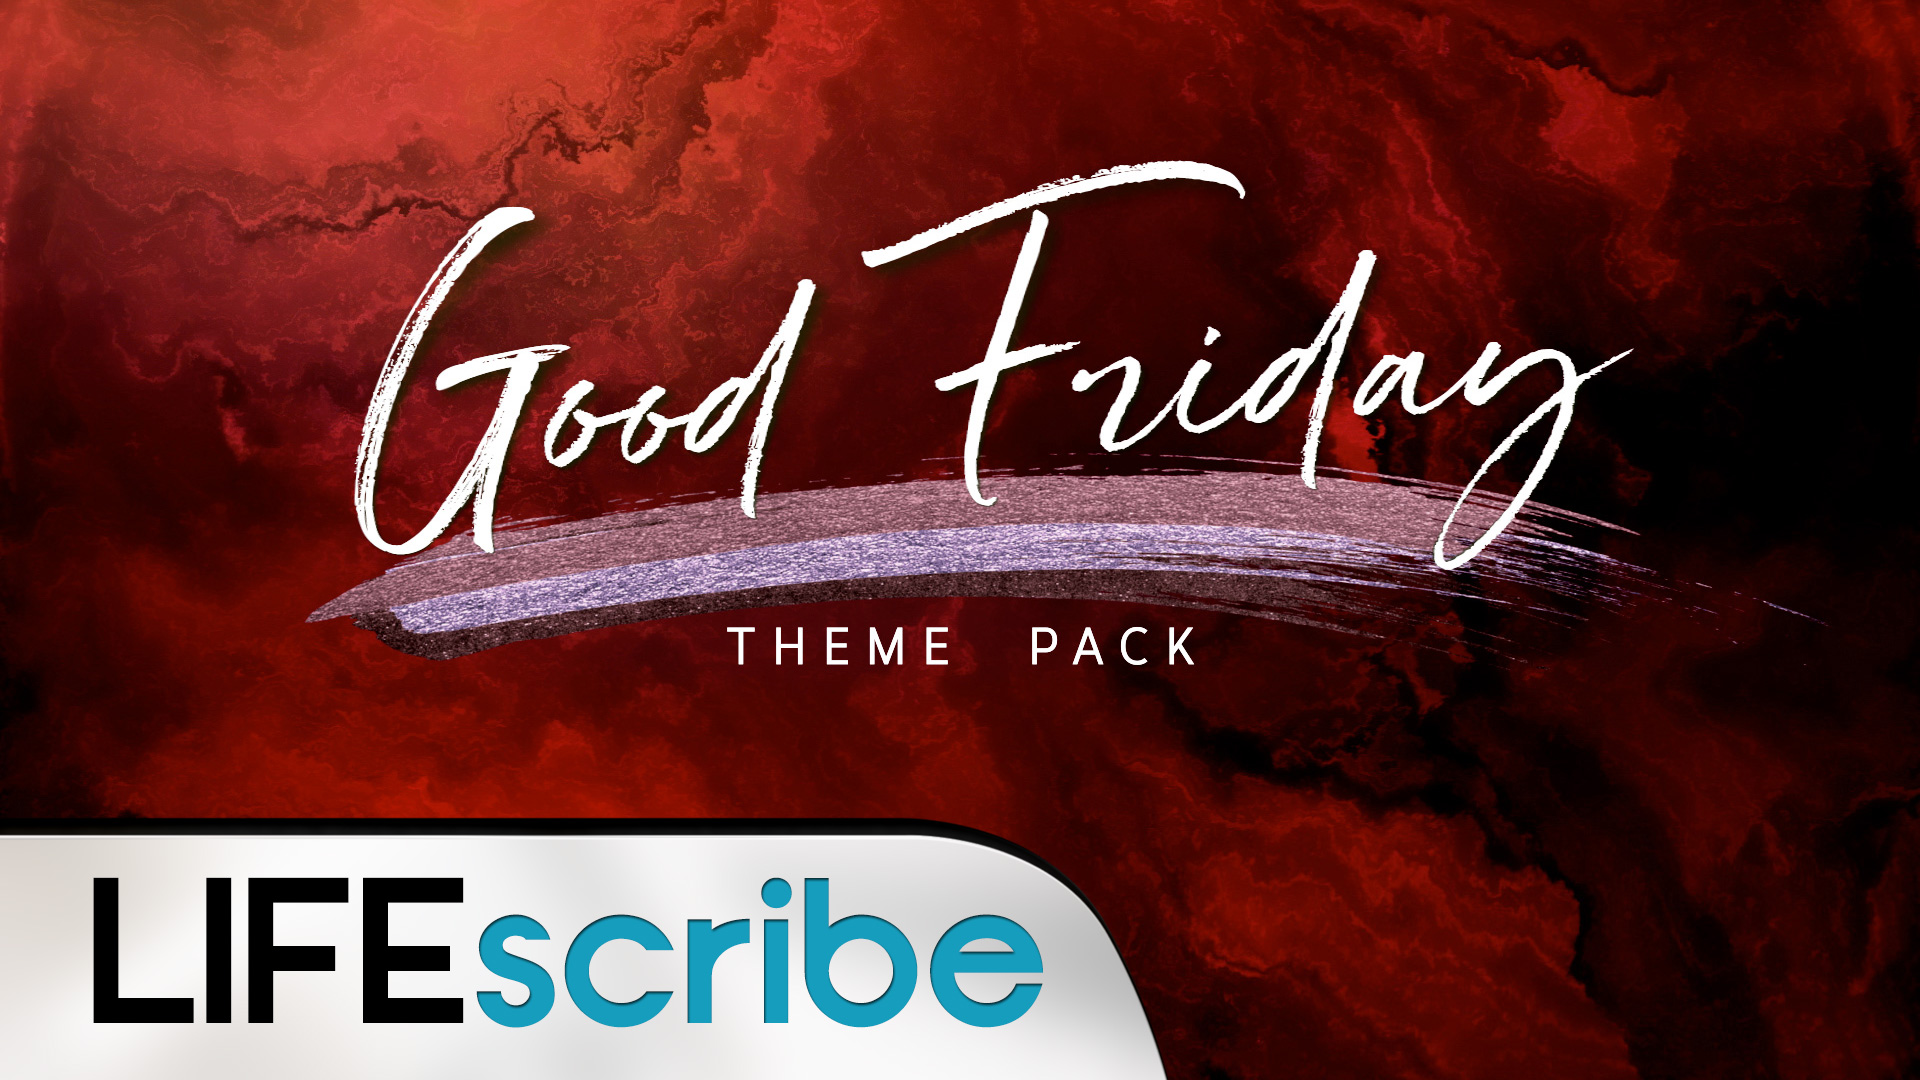 Good Friday Vol 4 Theme Pack